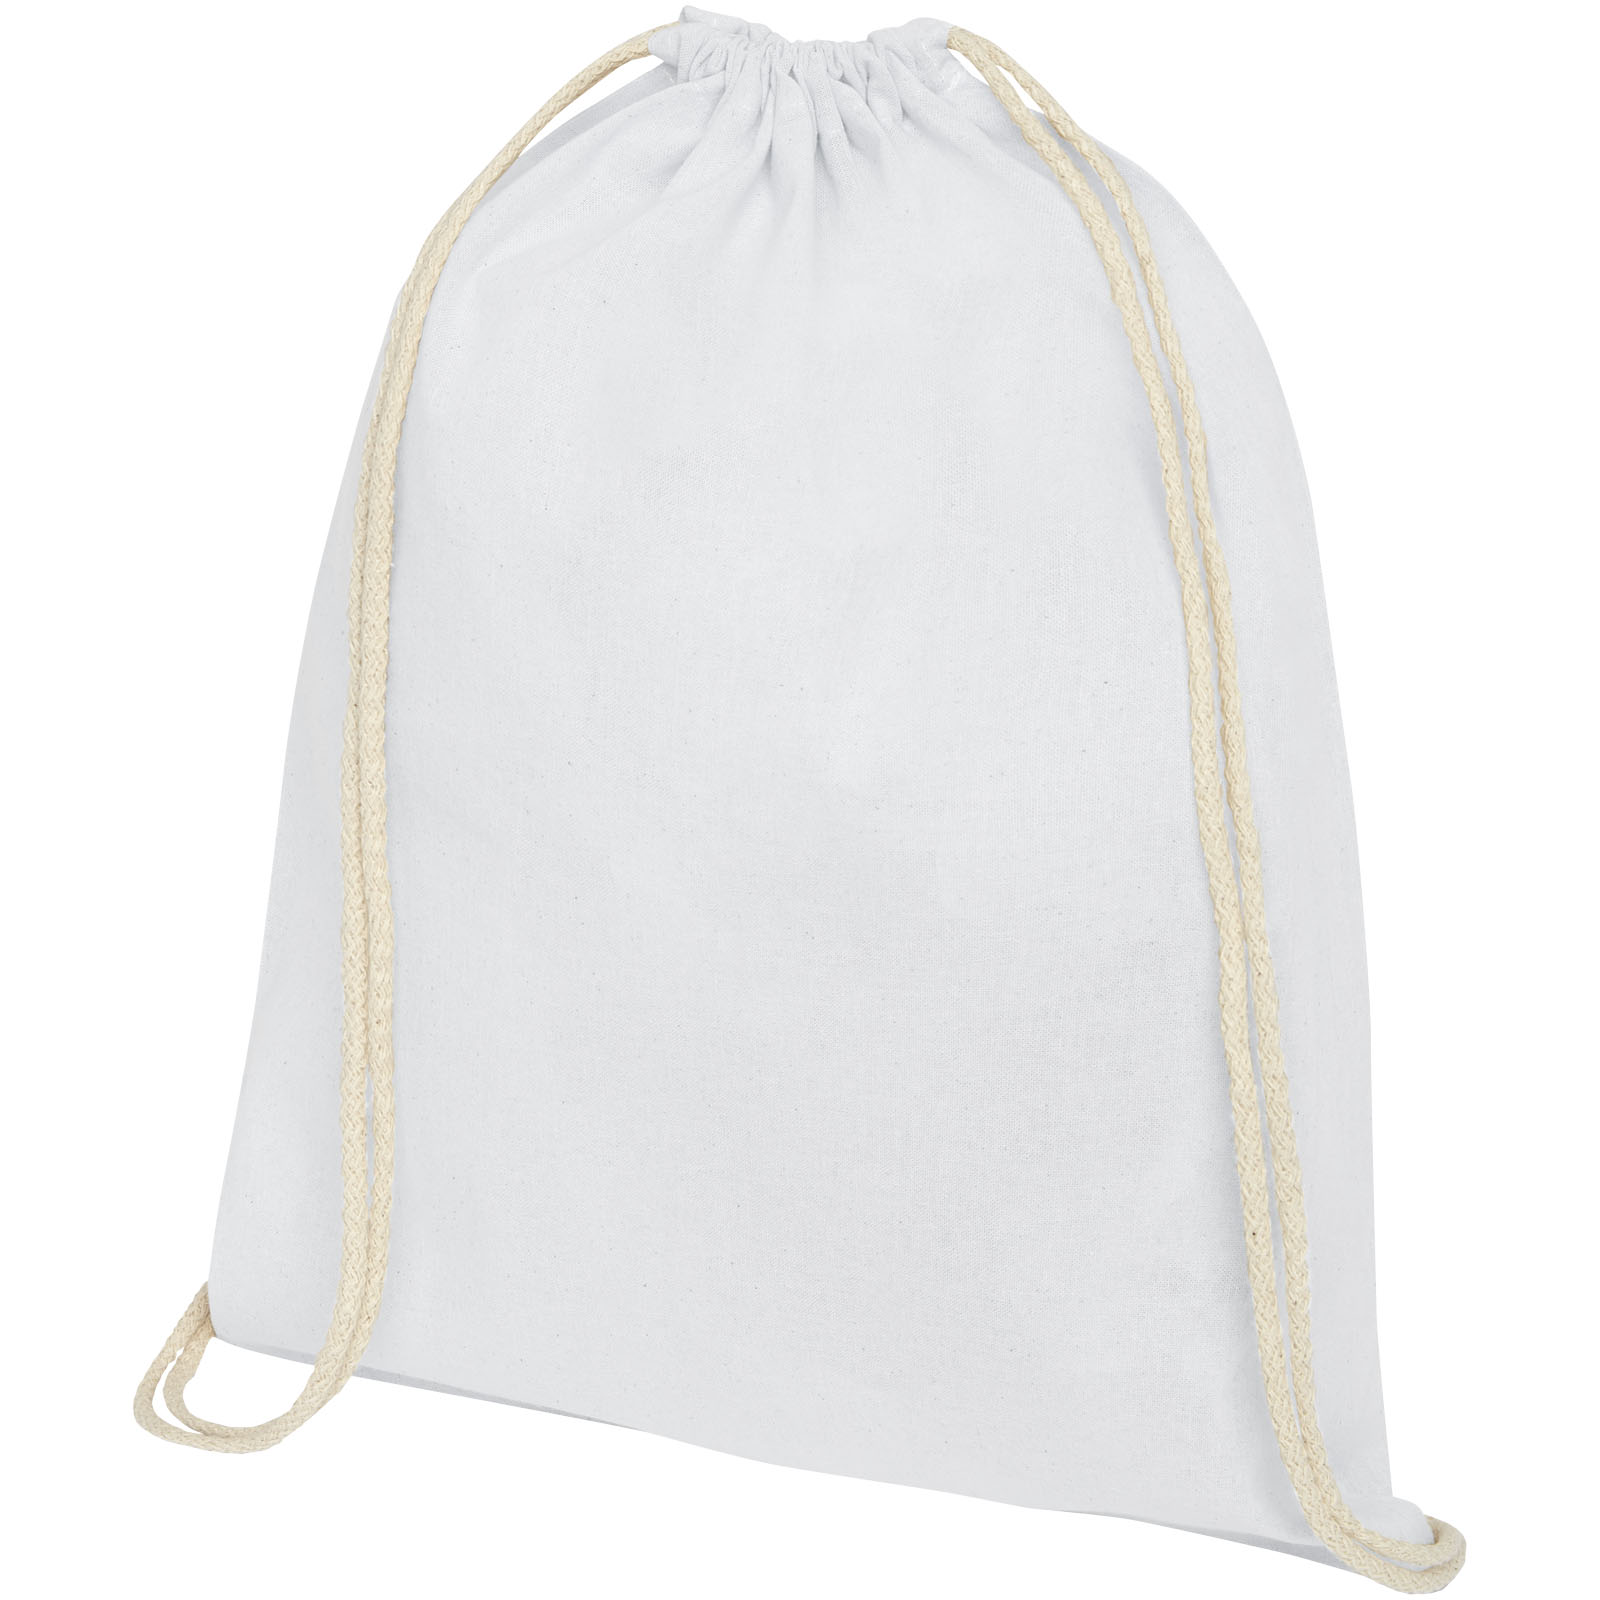 Drawstring Bags - Oregon 140 g/m² cotton drawstring backpack 5L